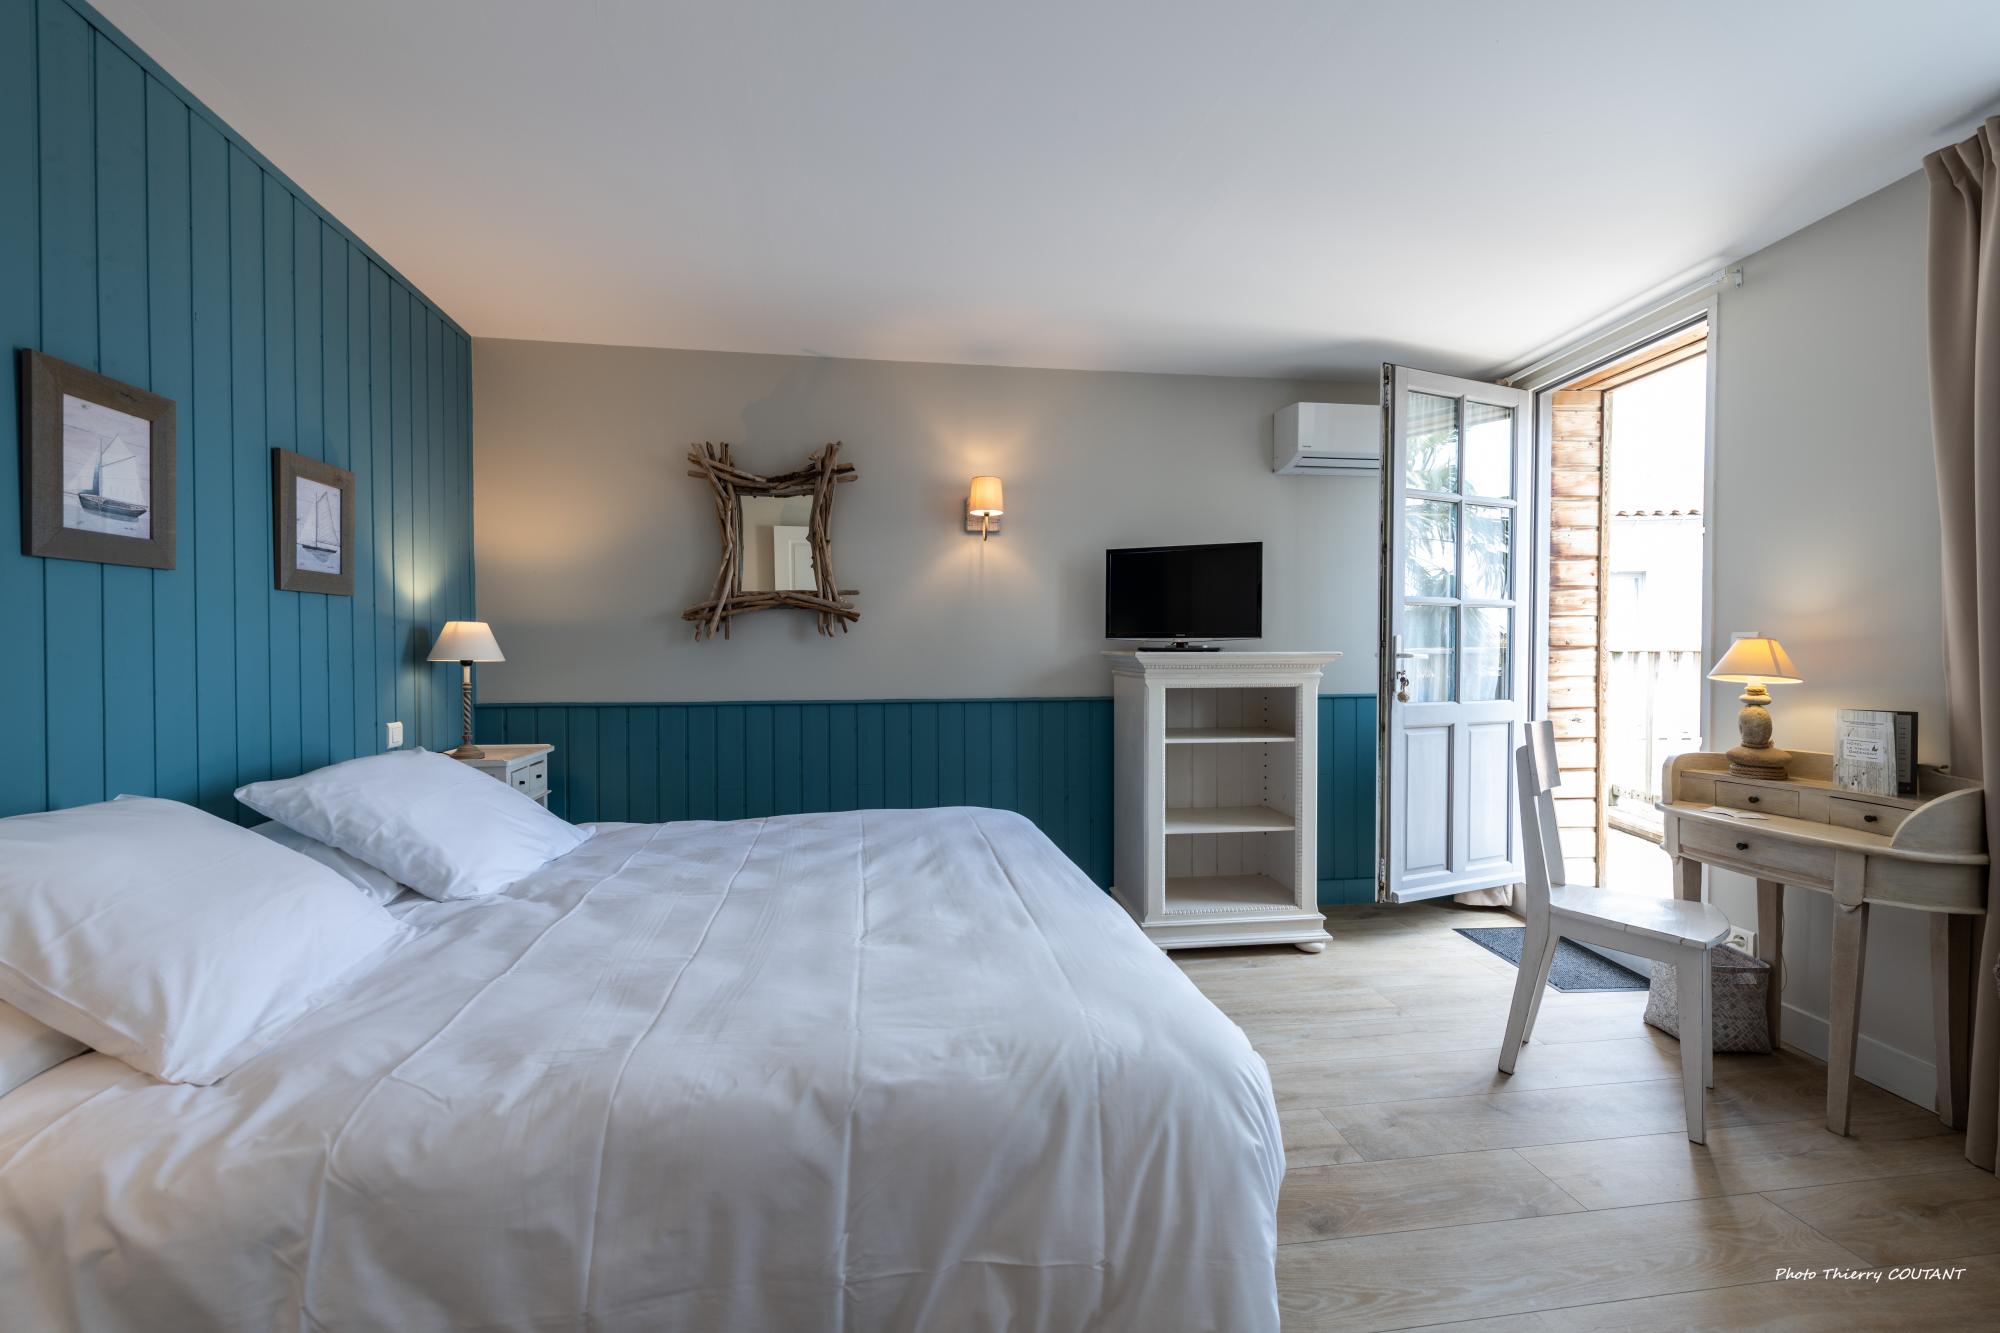 Superior hotel rooms : Hotel *** Le Vieux GrÃ©ement in La Couarde-sur-Mer (Island of RÃ©)